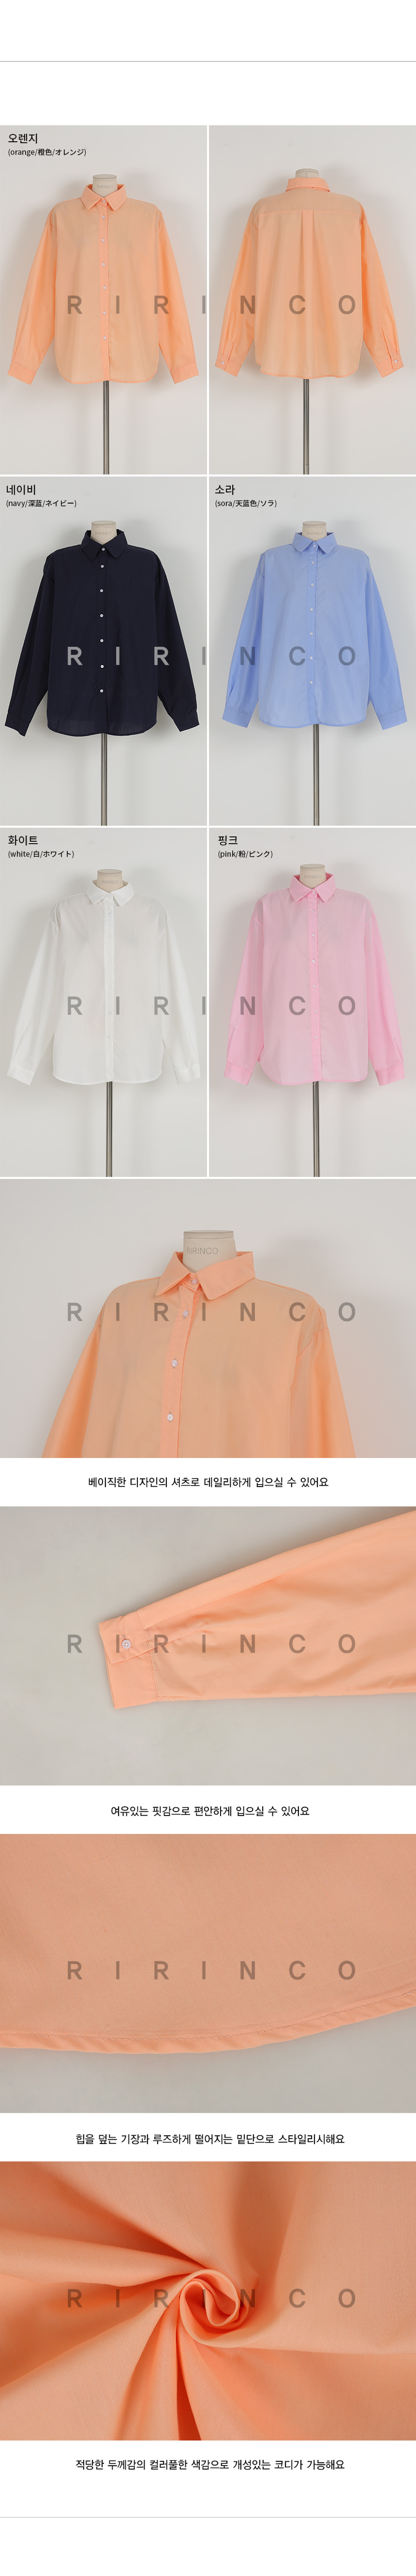 RIRINCO オーバーフィットカラーネックベーシックシャツ